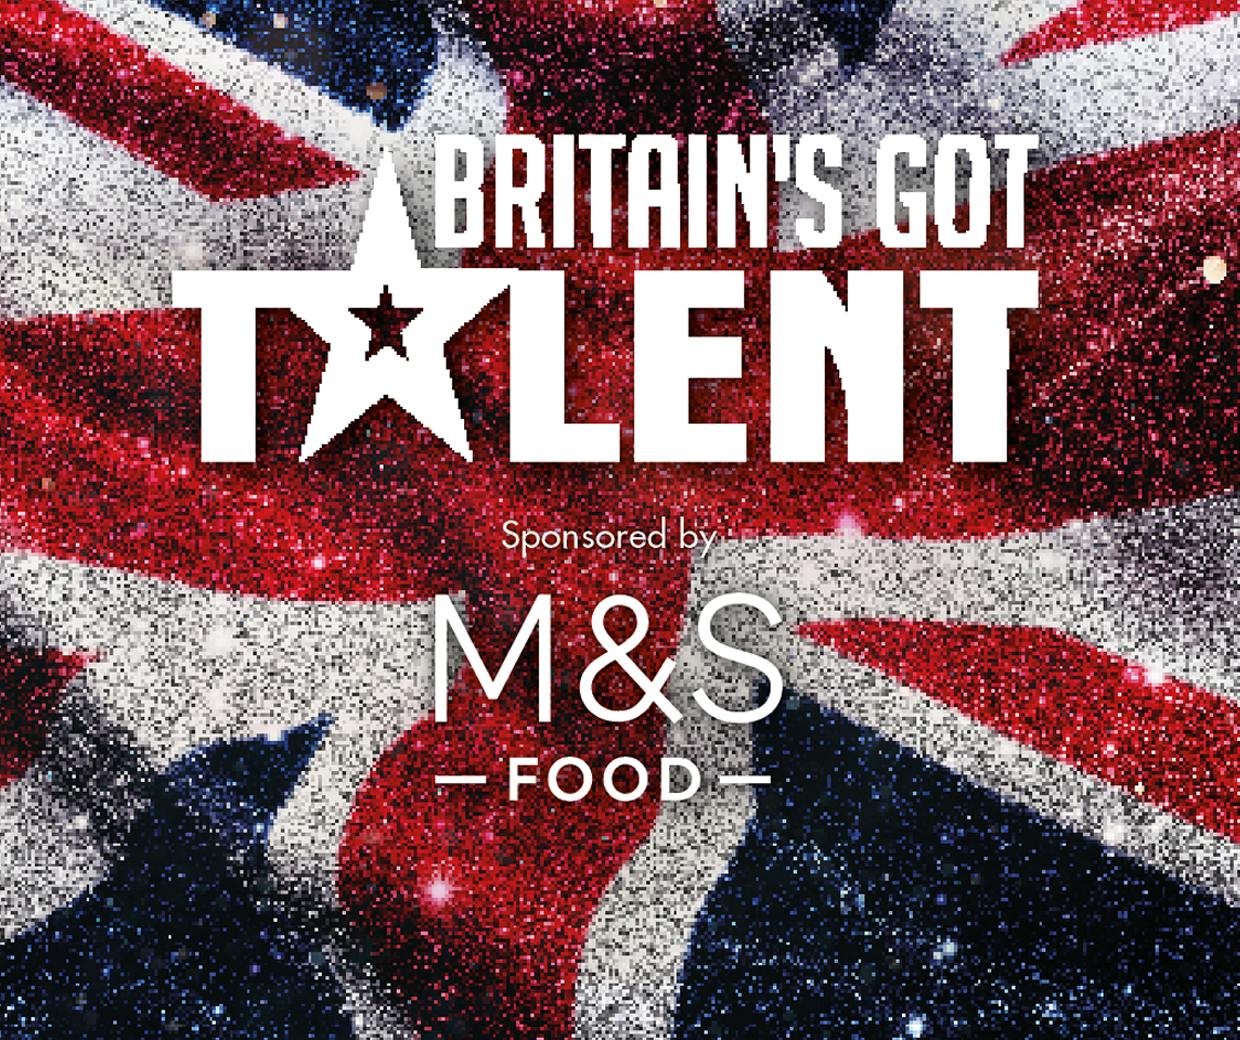 M&S Britain's Got Talent sponsorship